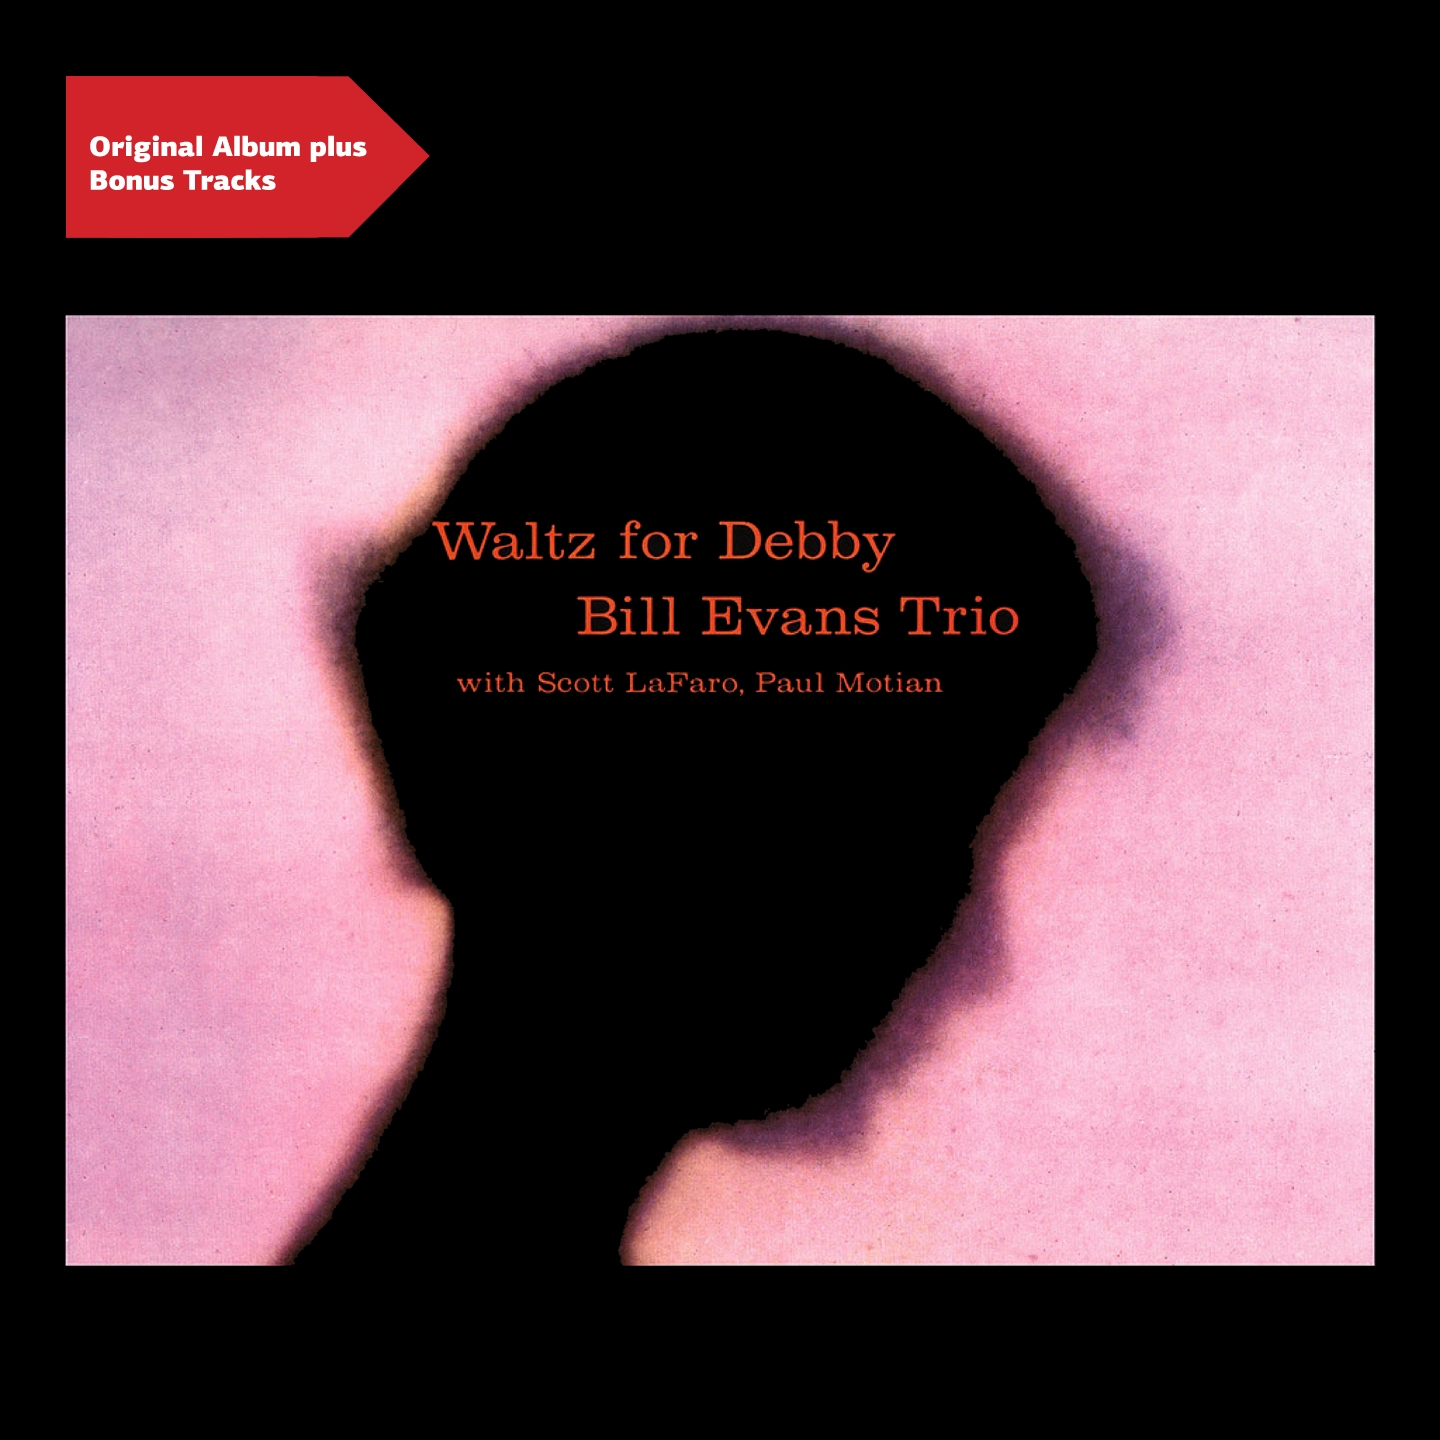 Waltz for Debby (Take 1) (Bonus Track)